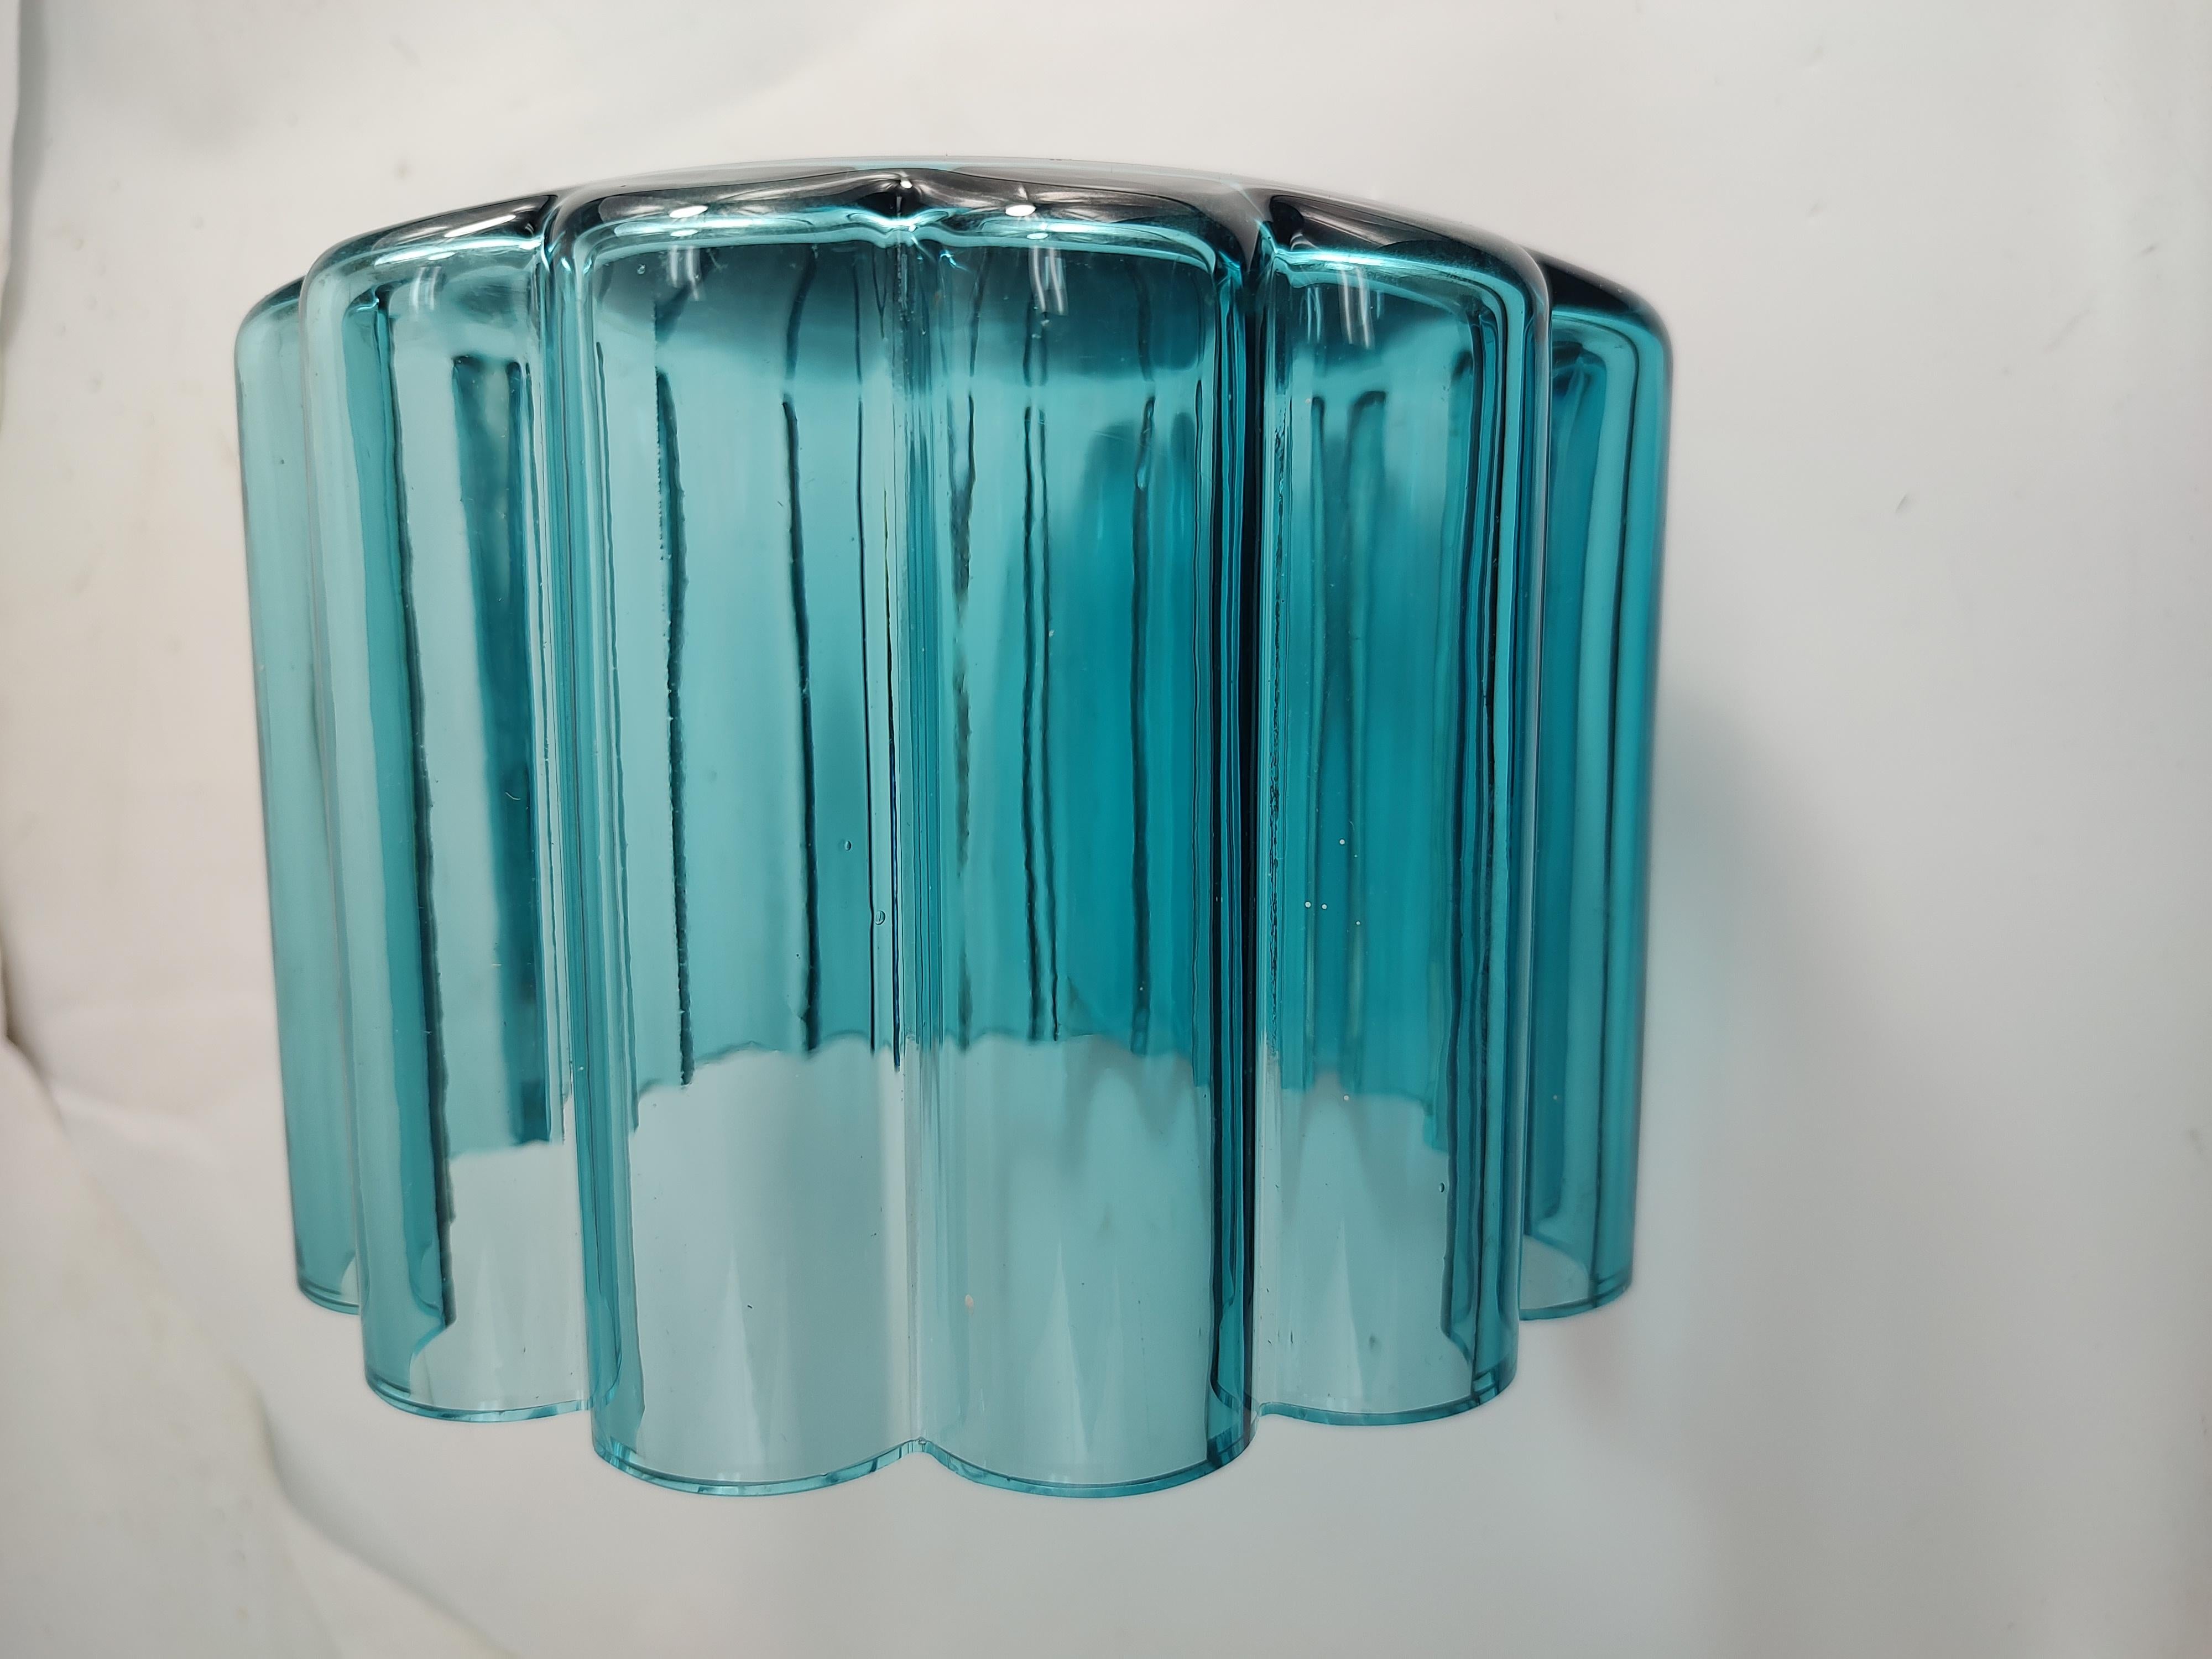 Hand-Crafted Dansk Design Scalloped Blue Art Glass Vase Bowl by Jens Quistgaard For Sale